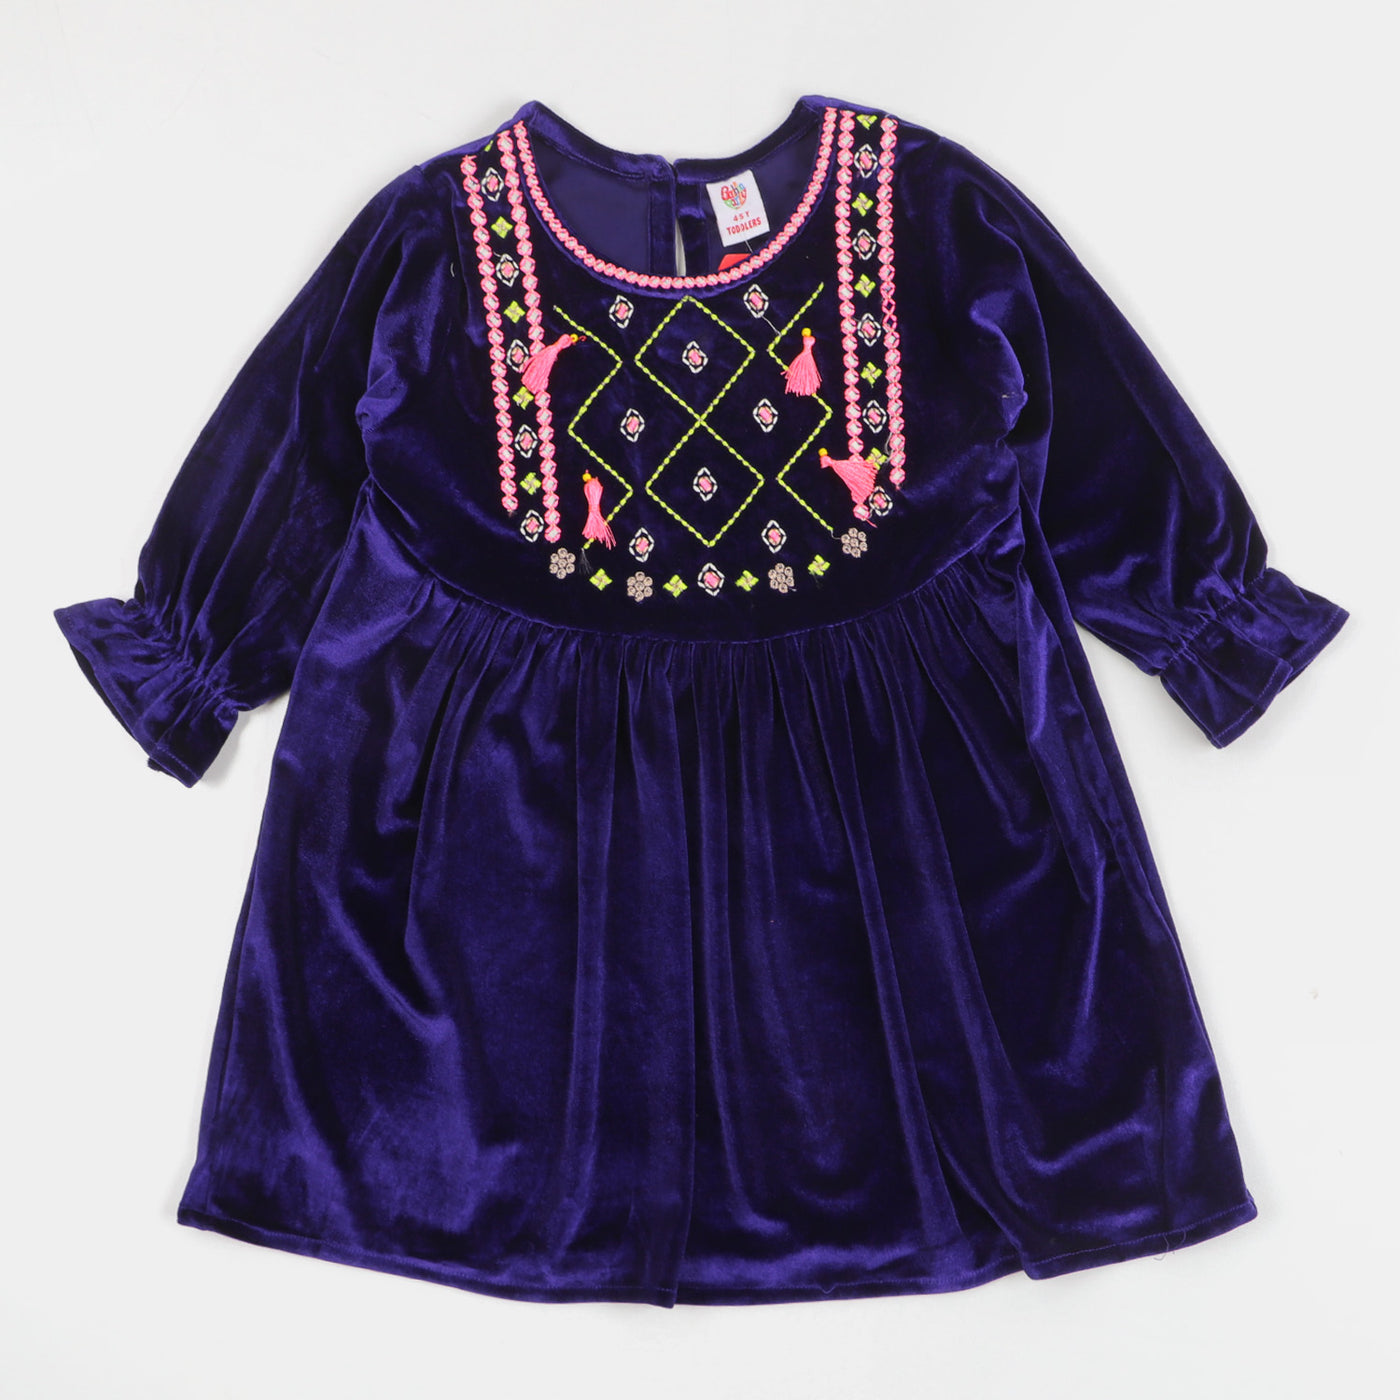 Girls Velvet Embroidered Top Hanging Tassels - Purple